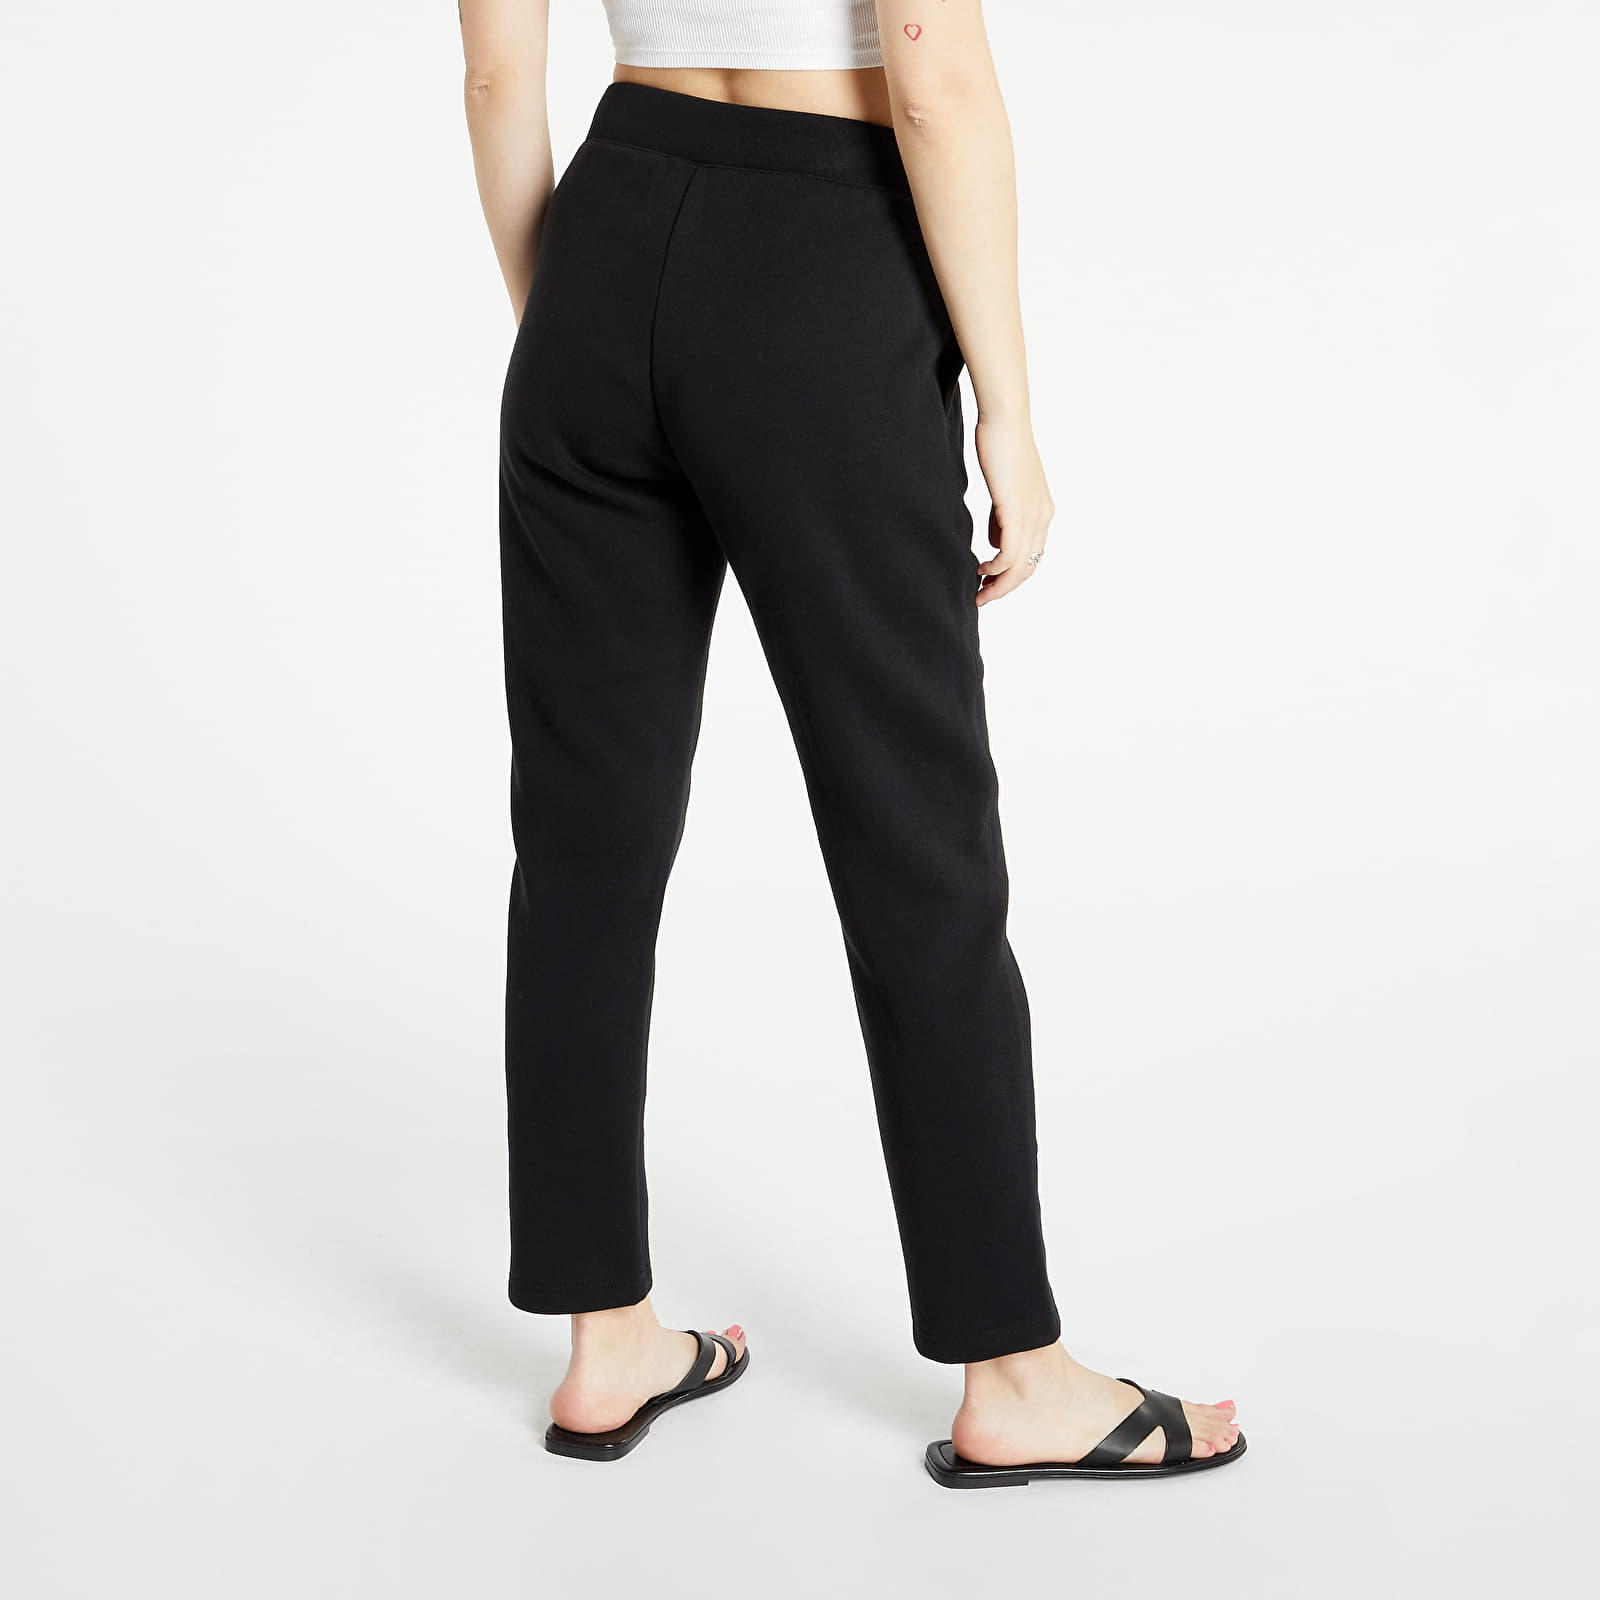 Buy Champion Women's Pants Style Rn15763 Black at